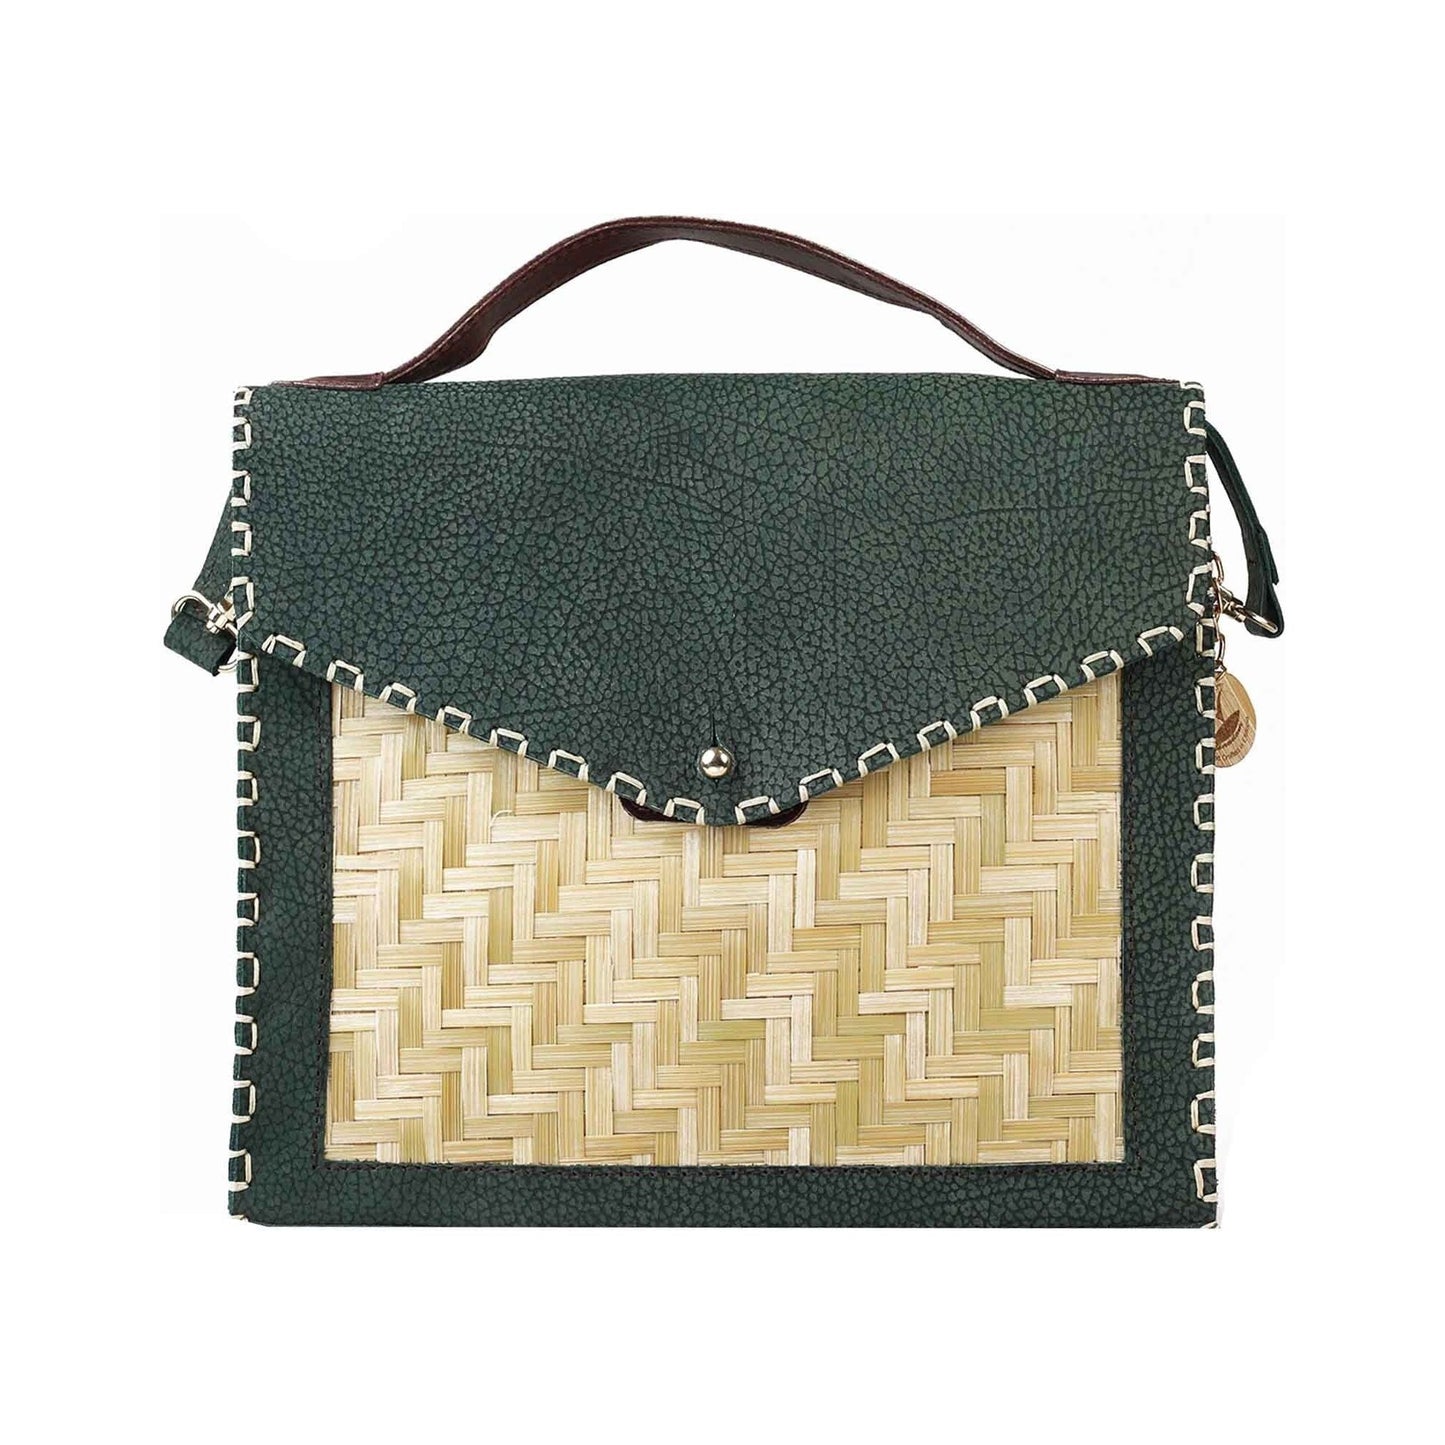 Kuru - unique handbag handmade from bamboo, high quality Ethiopian leather, and handwoven fabric by Tenadam